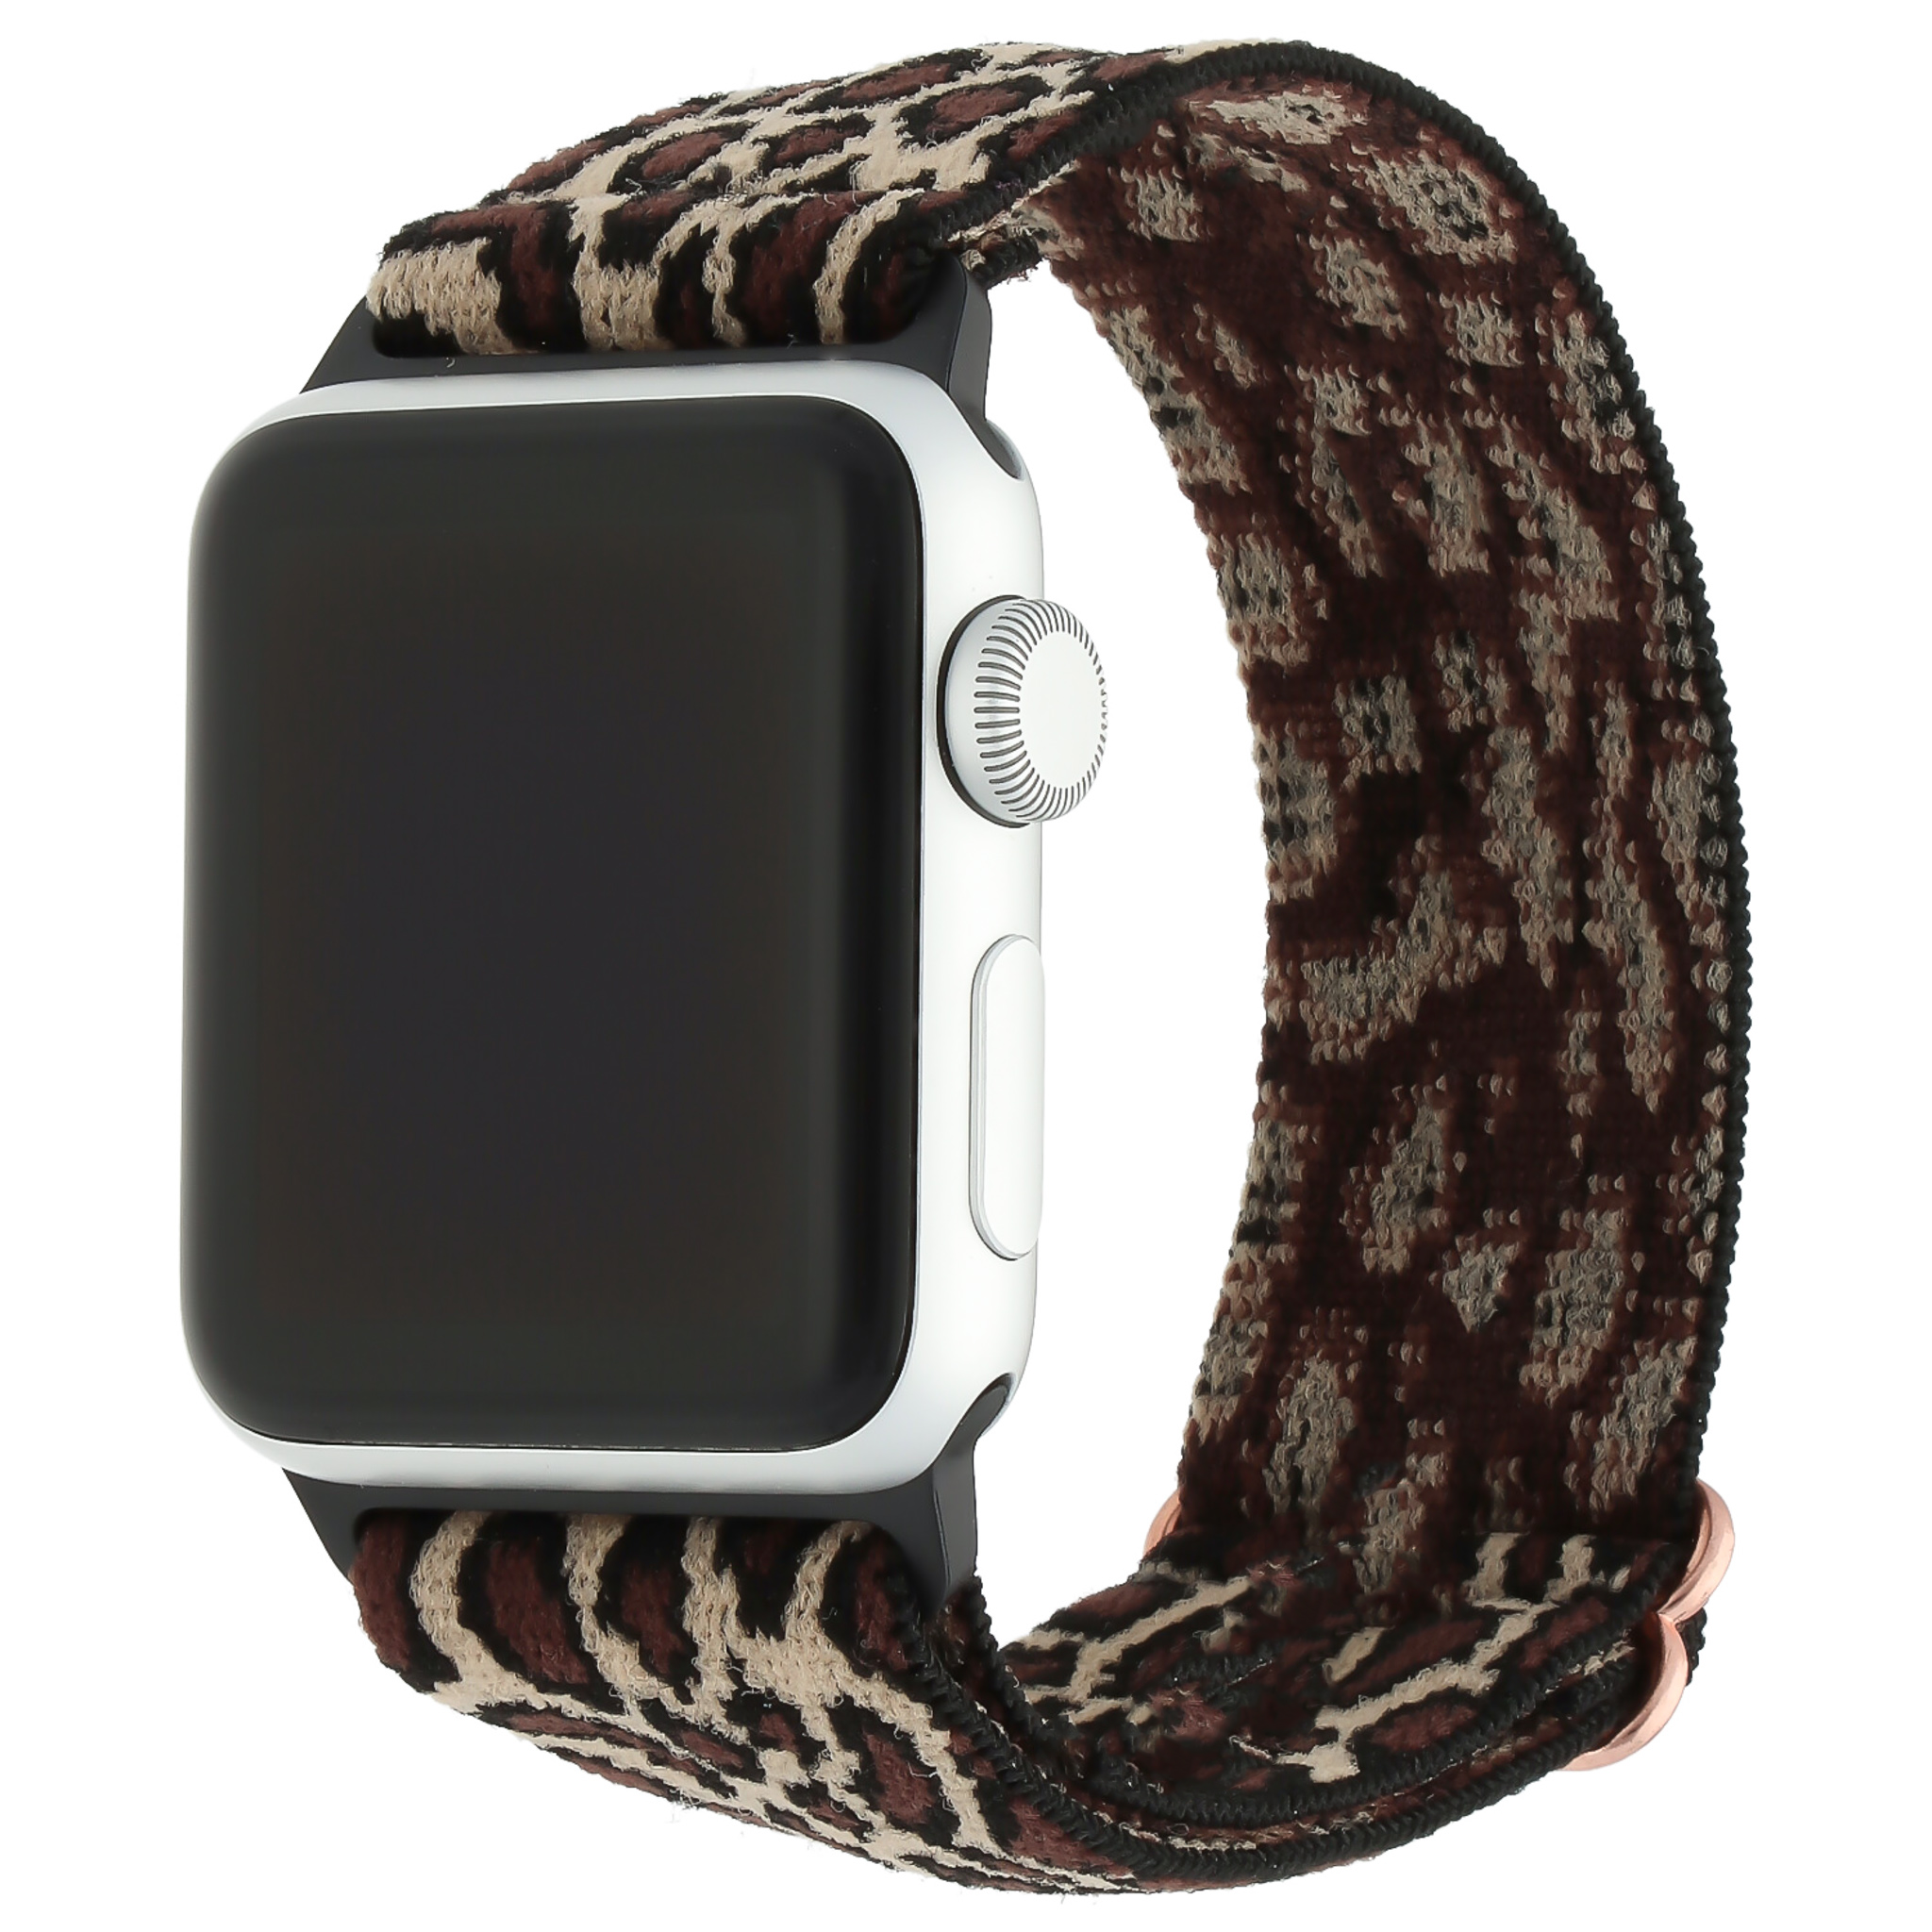 Cinturino solista in nylon per Apple Watch - leopardo